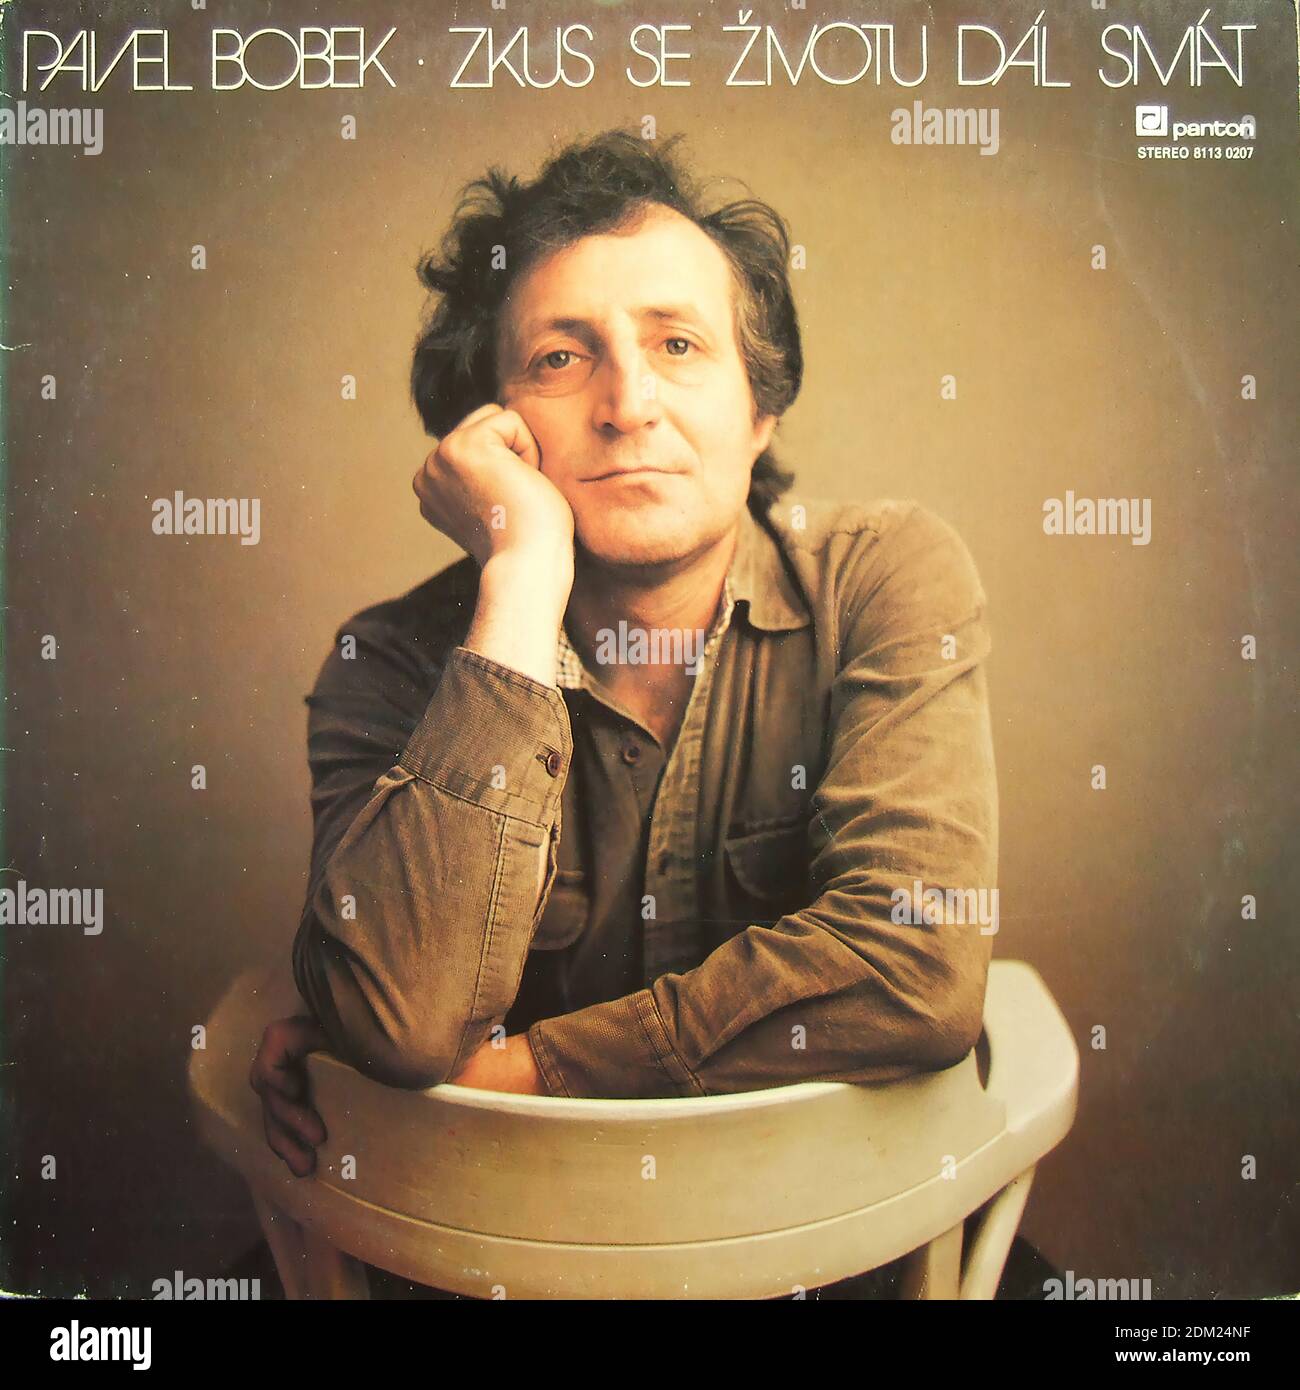 Pavel Bobek - Zkus SE Zivotu Dal SMAT, Panton 8113 0207 - Vintage Vinyl Album Cover Stockfoto